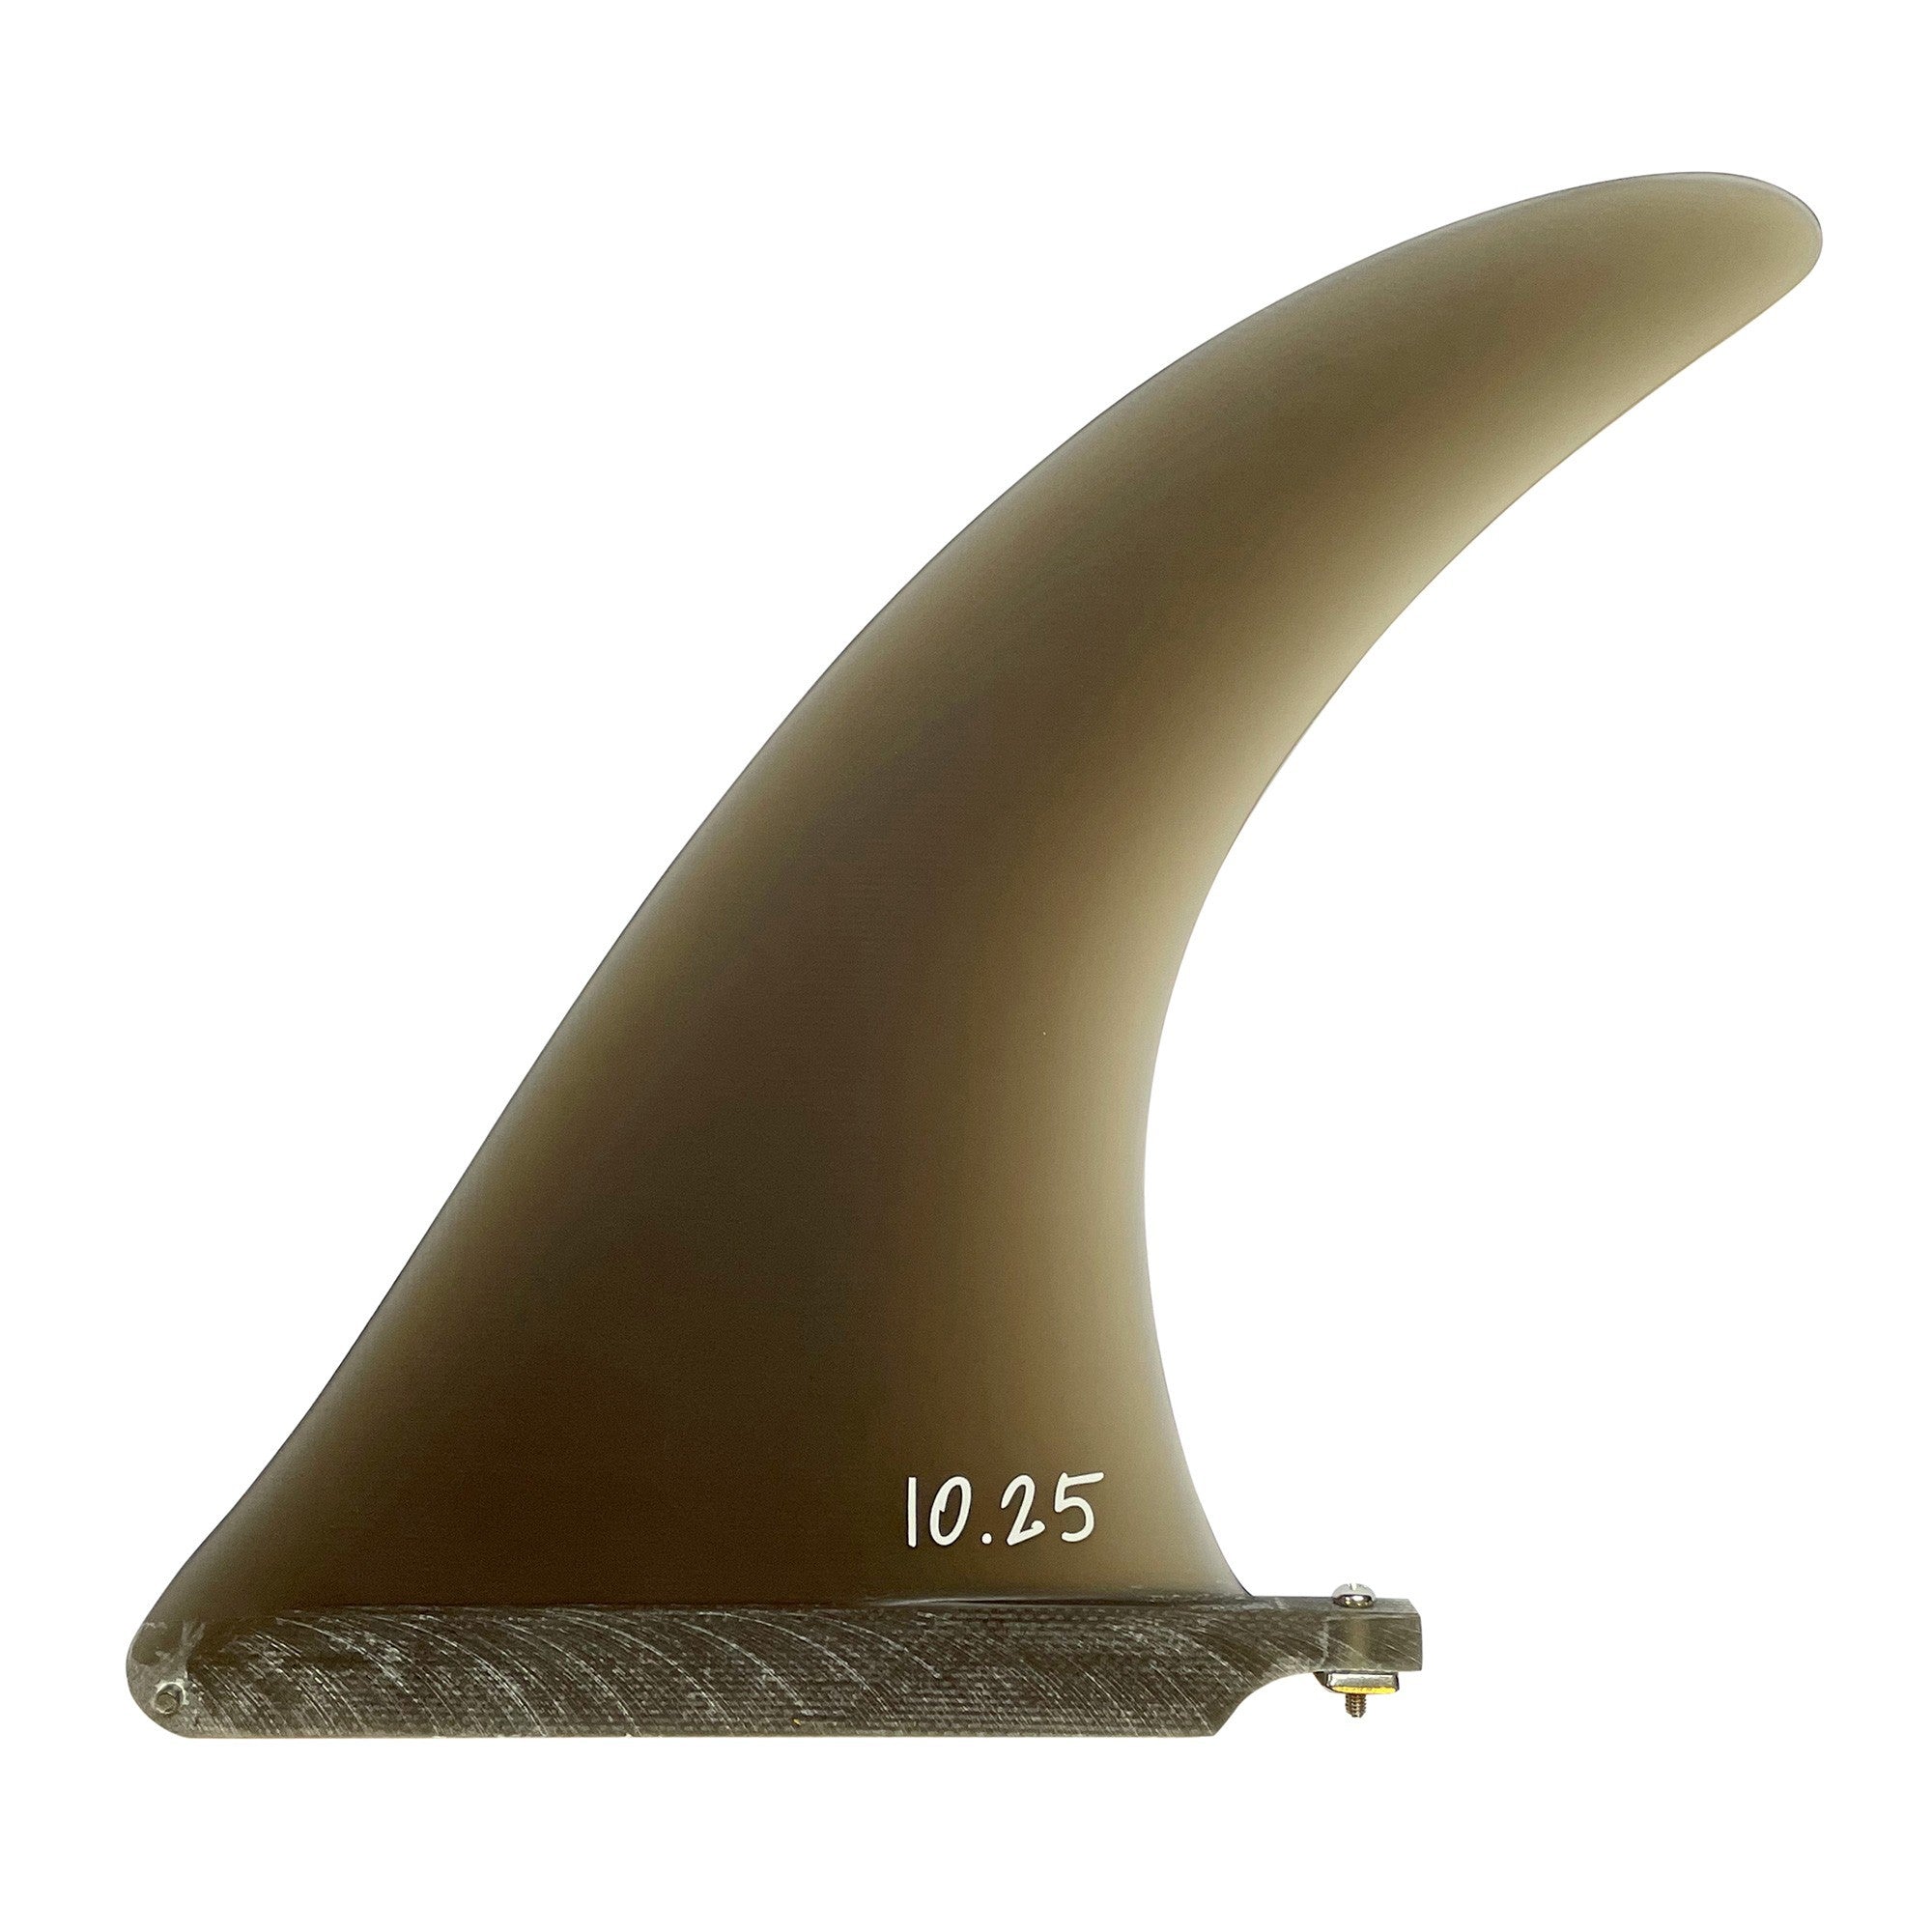 SURF SYSTEM - Dolphin Fiberglass Single Fin (Us Box) - 9.75" - Smoke